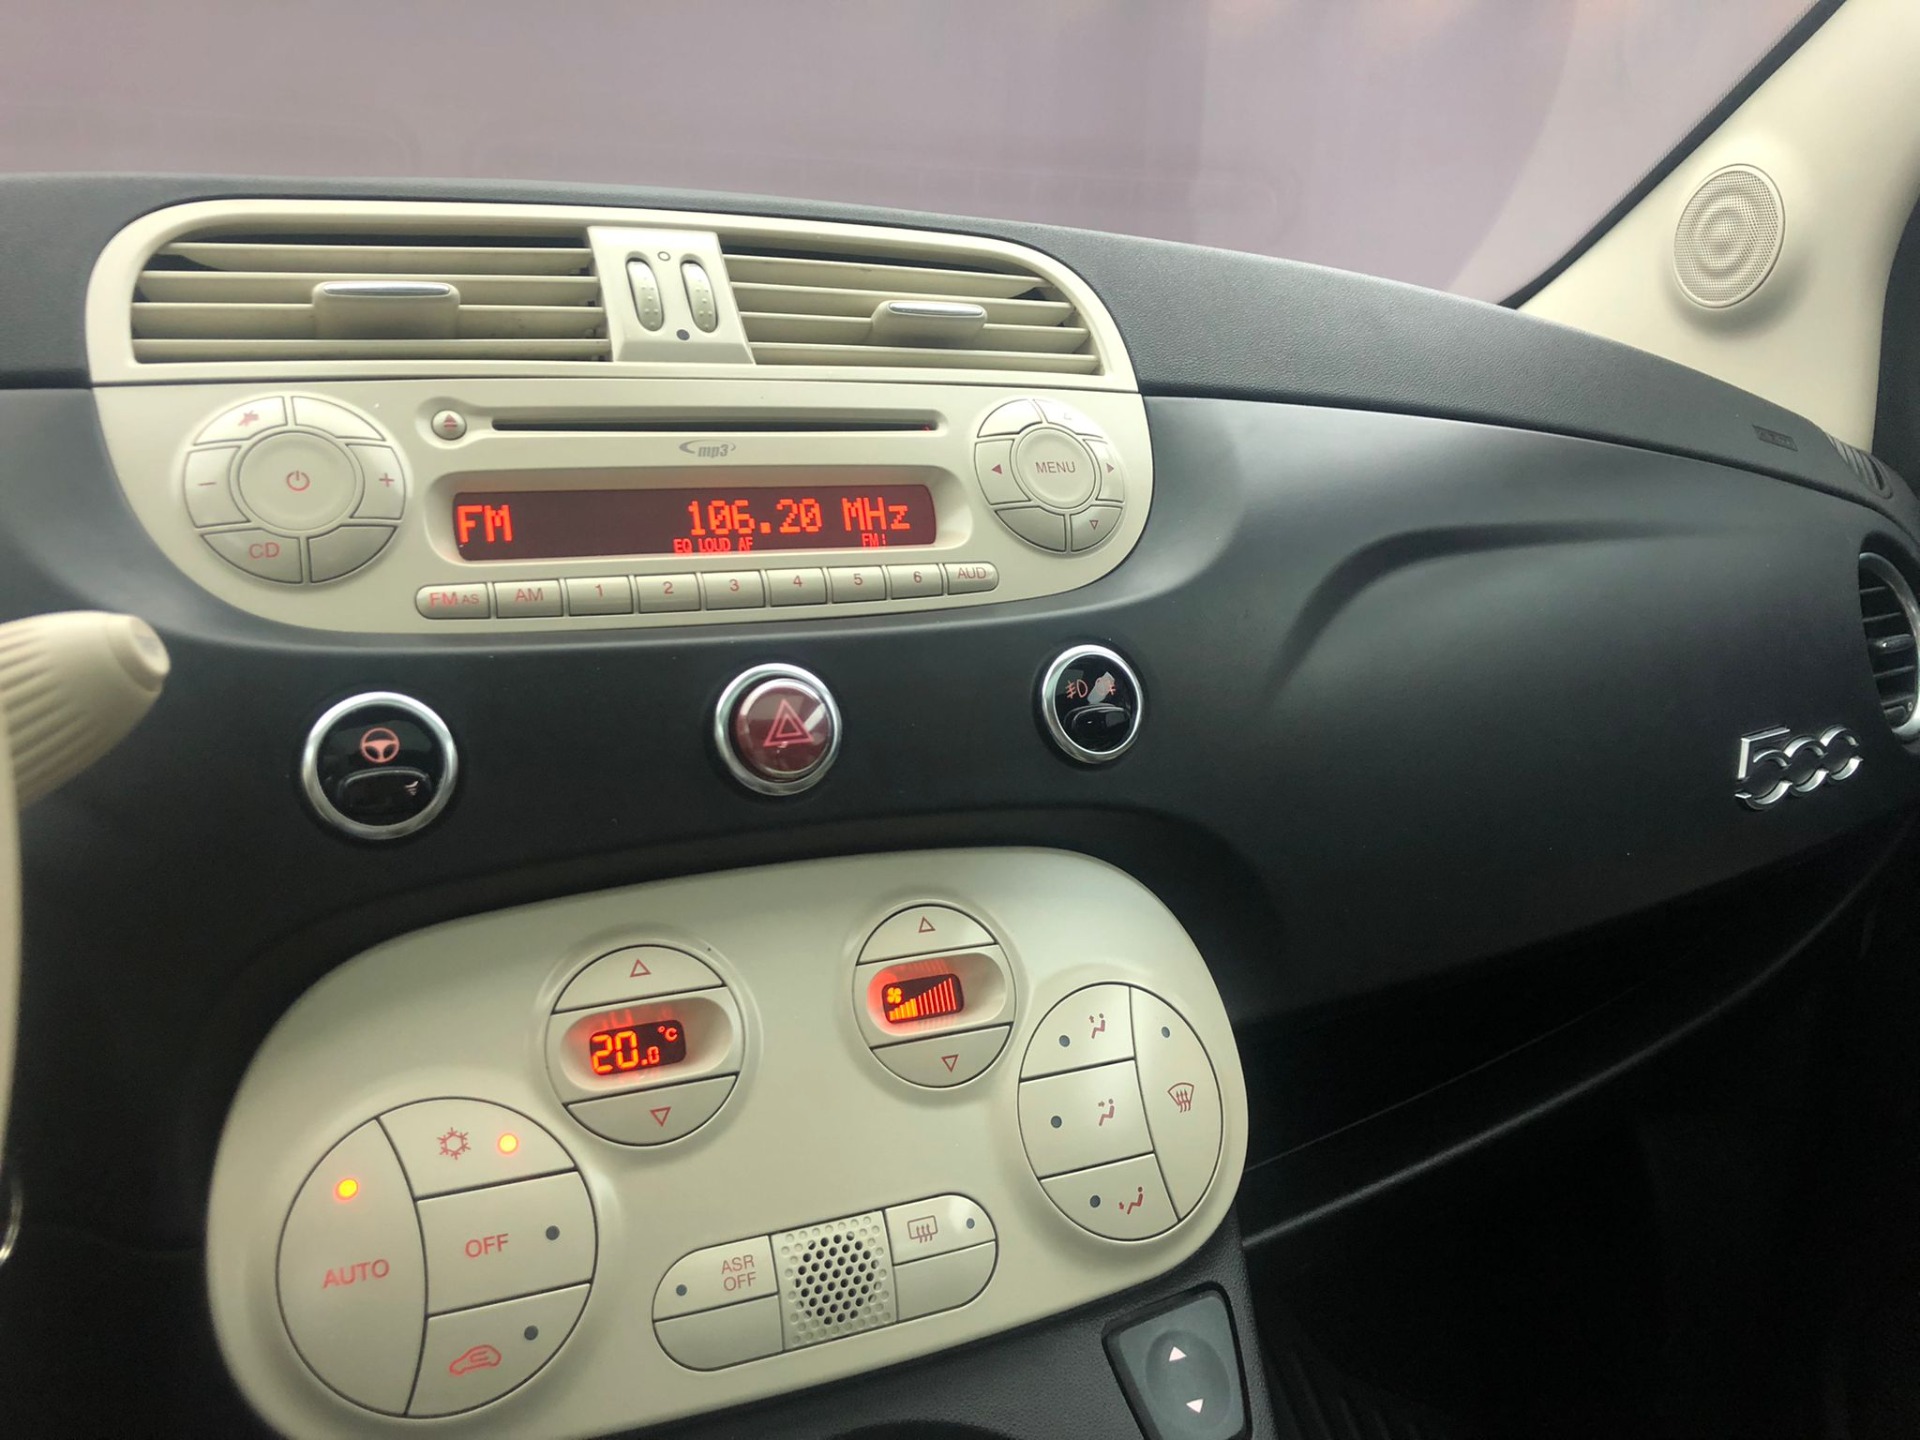 79Bin Km'de Otomatik Gucci Fiat 500-16